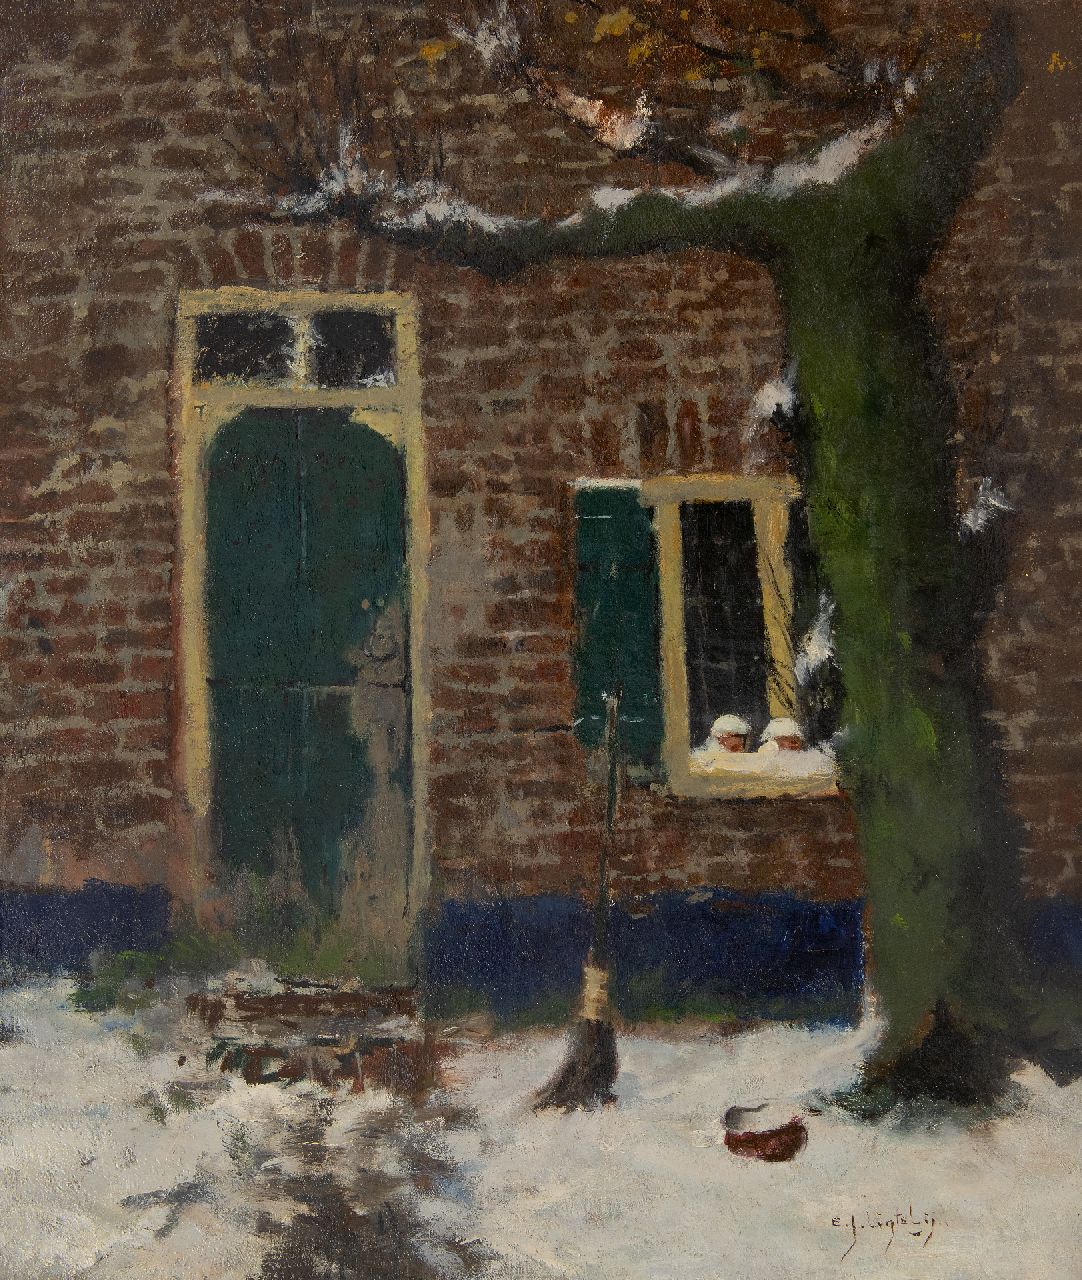 Ligtelijn E.J.  | Evert Jan Ligtelijn | Paintings offered for sale | Backyard of a farm in the snow, oil on canvas 60.3 x 50.3 cm, signed l.r.